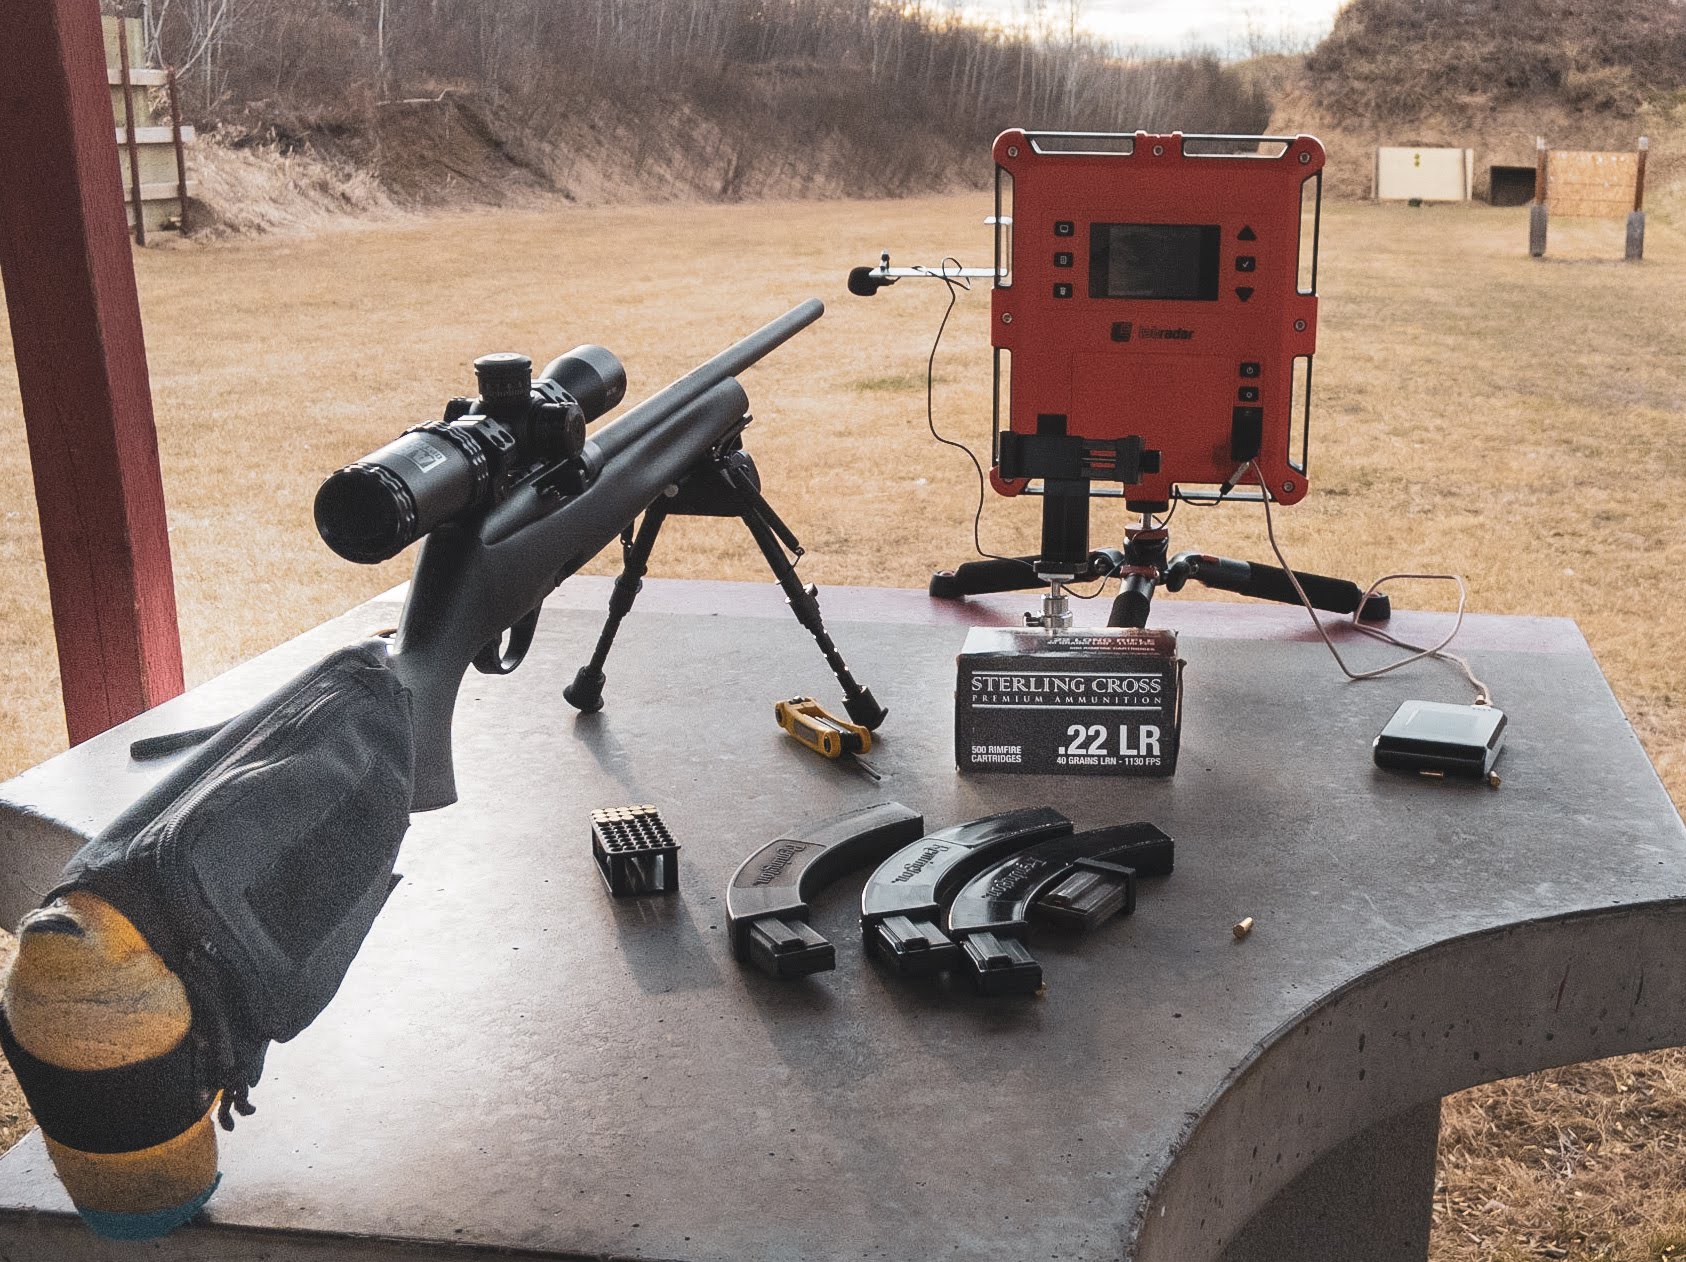 Shooting bench at the range